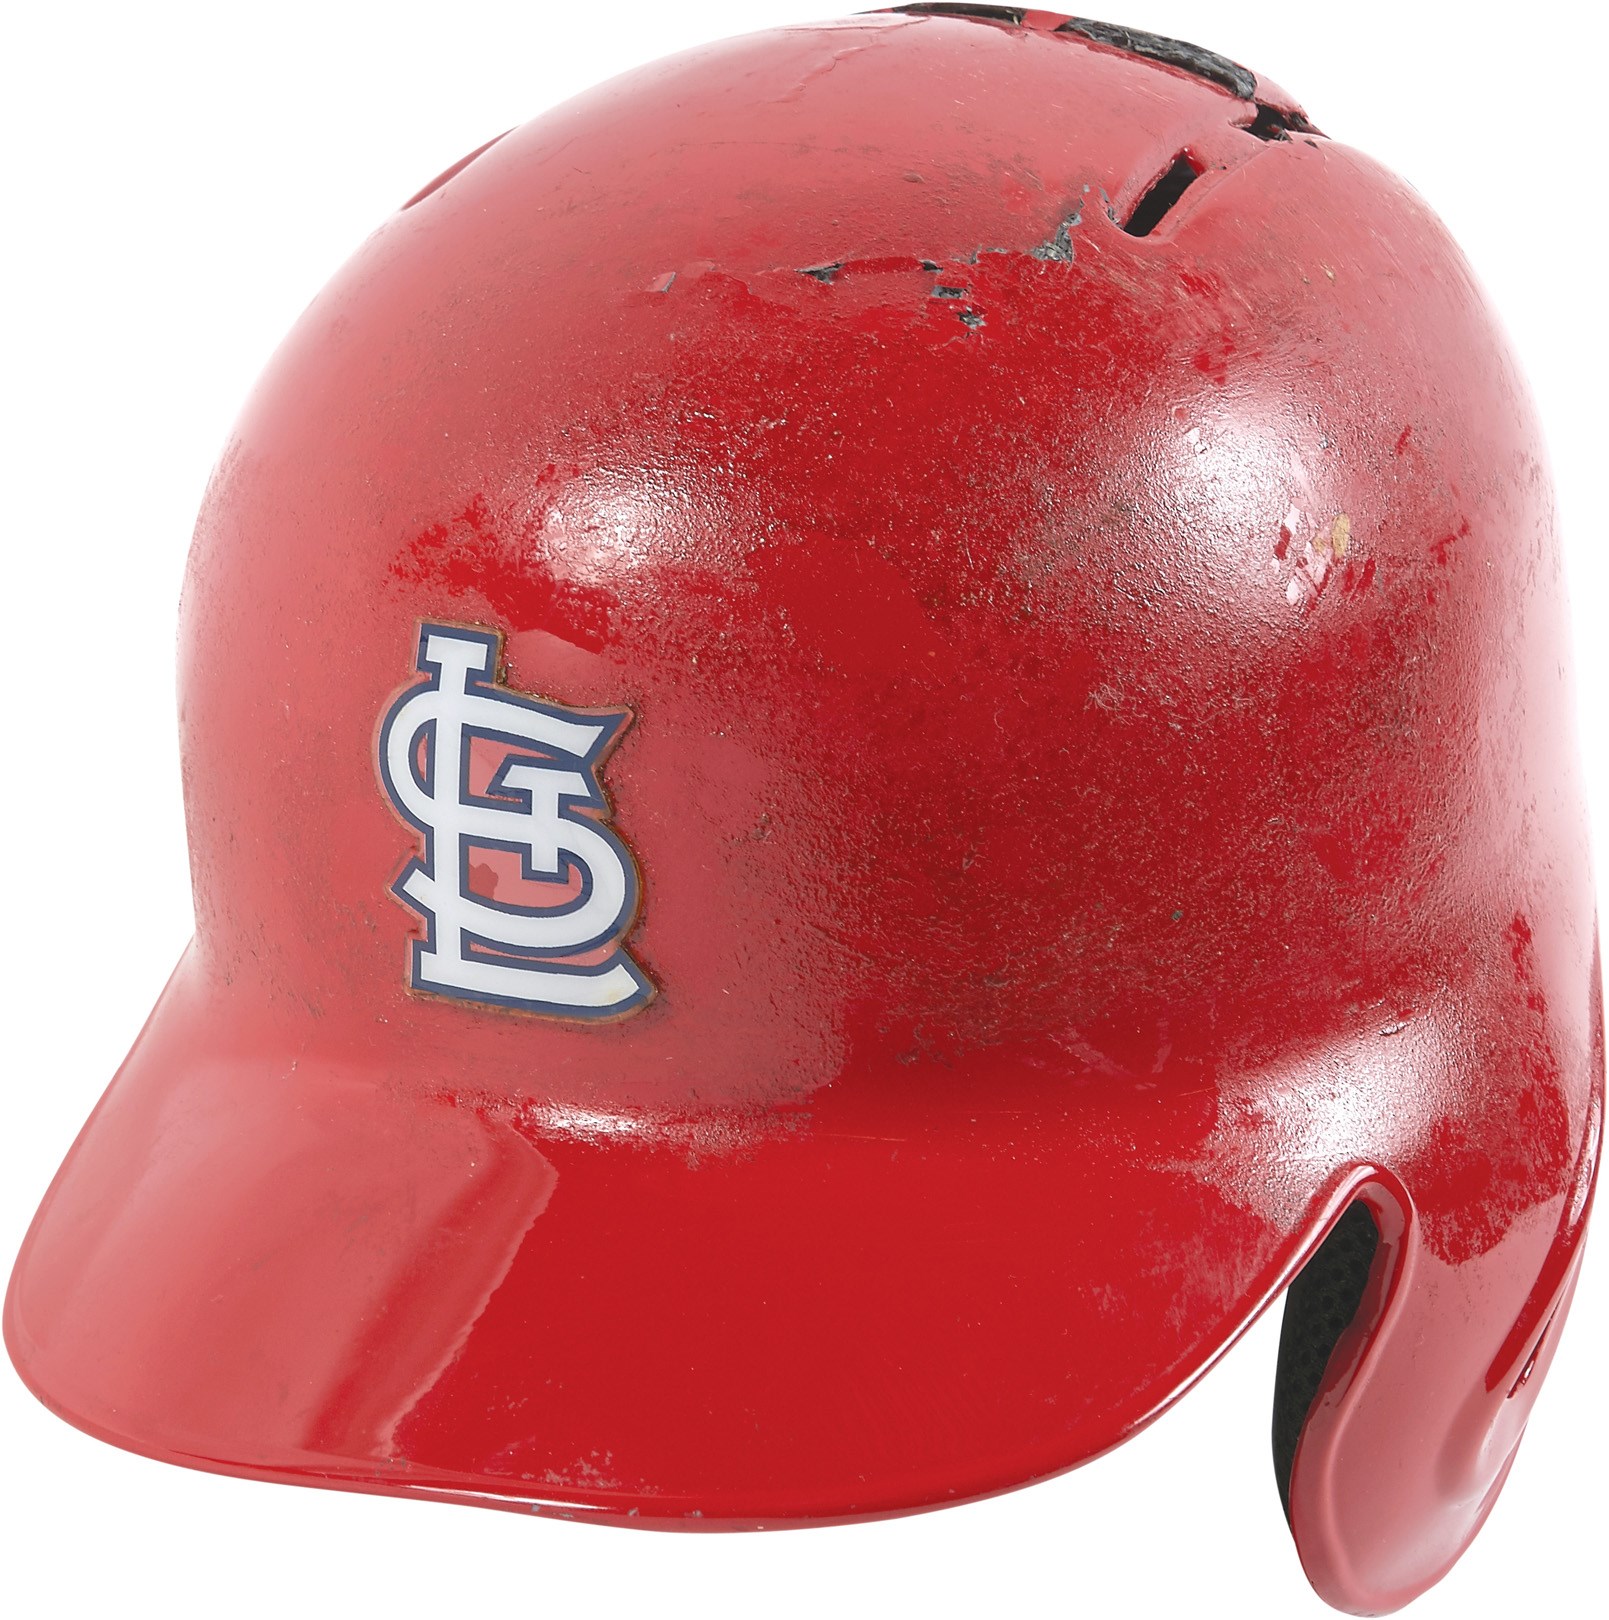 - 2014 Yadier Molina Game Worn Cardinals Batting Helmet - Photo-Matched (Resolution Photomatching LOA)